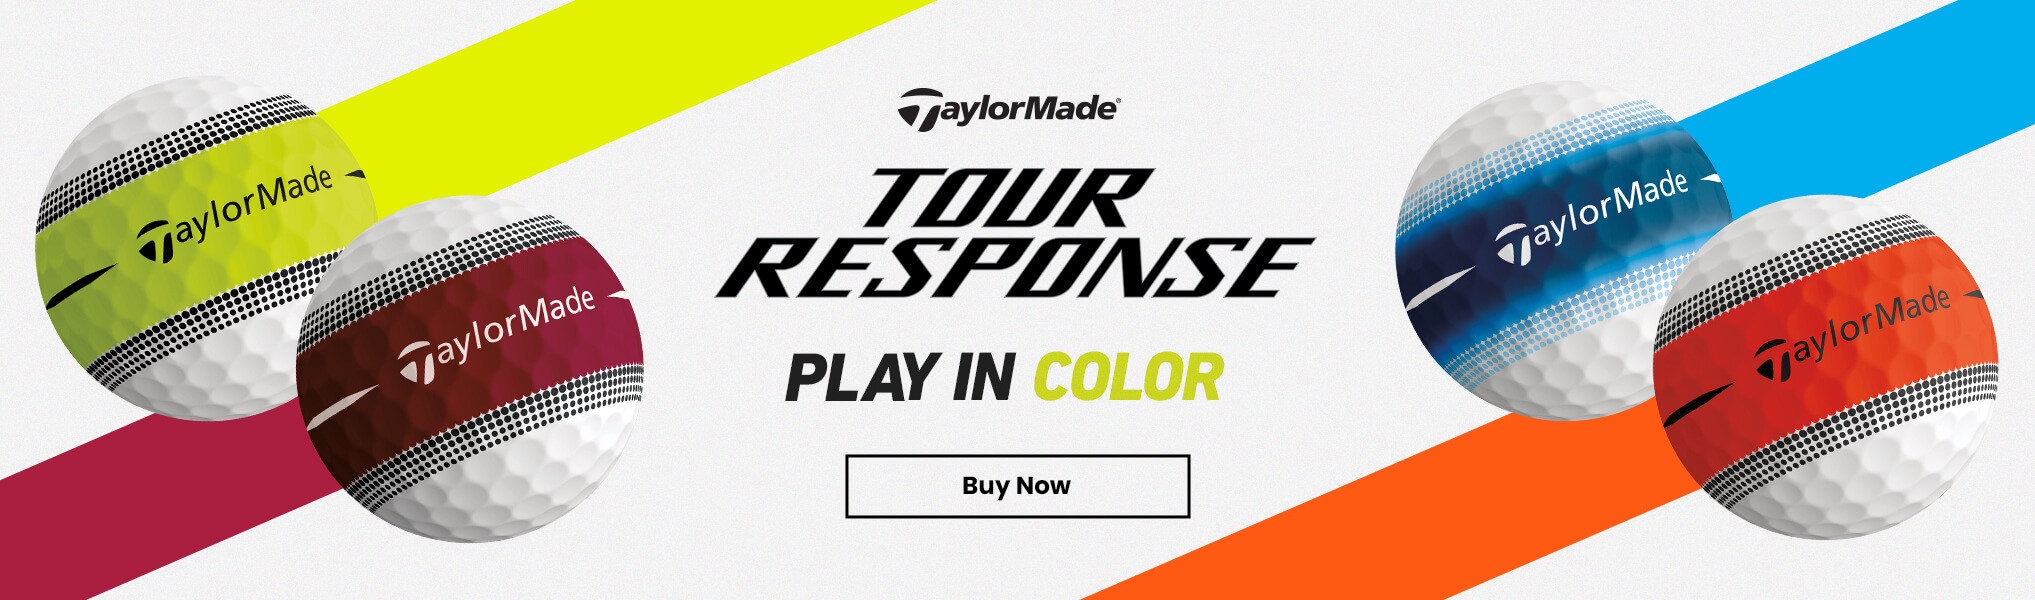 TaylorMade Tour Response Stripe